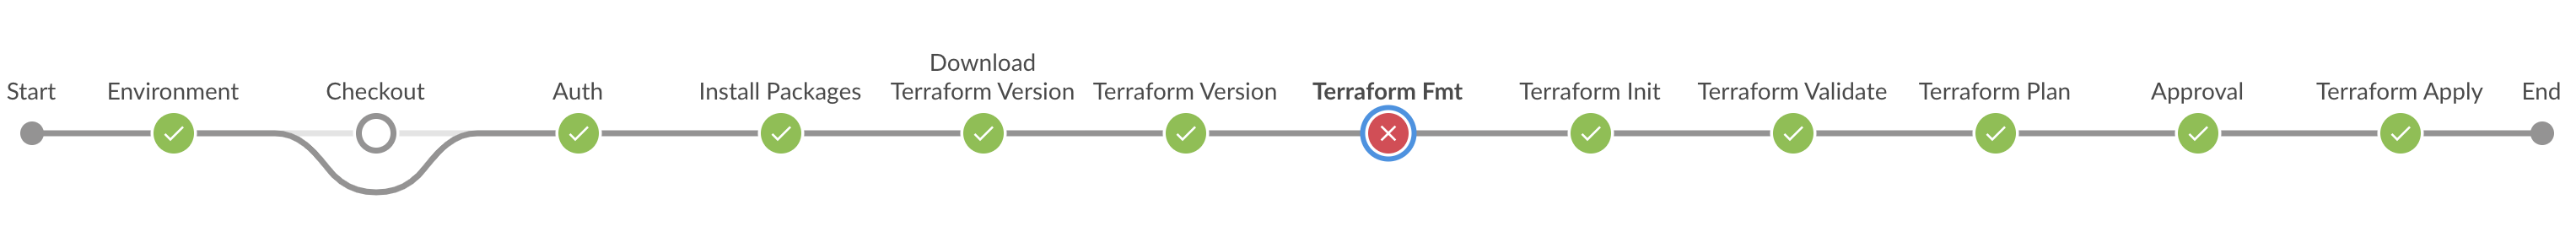 terraform_applied_but_failed_fmt_check.png